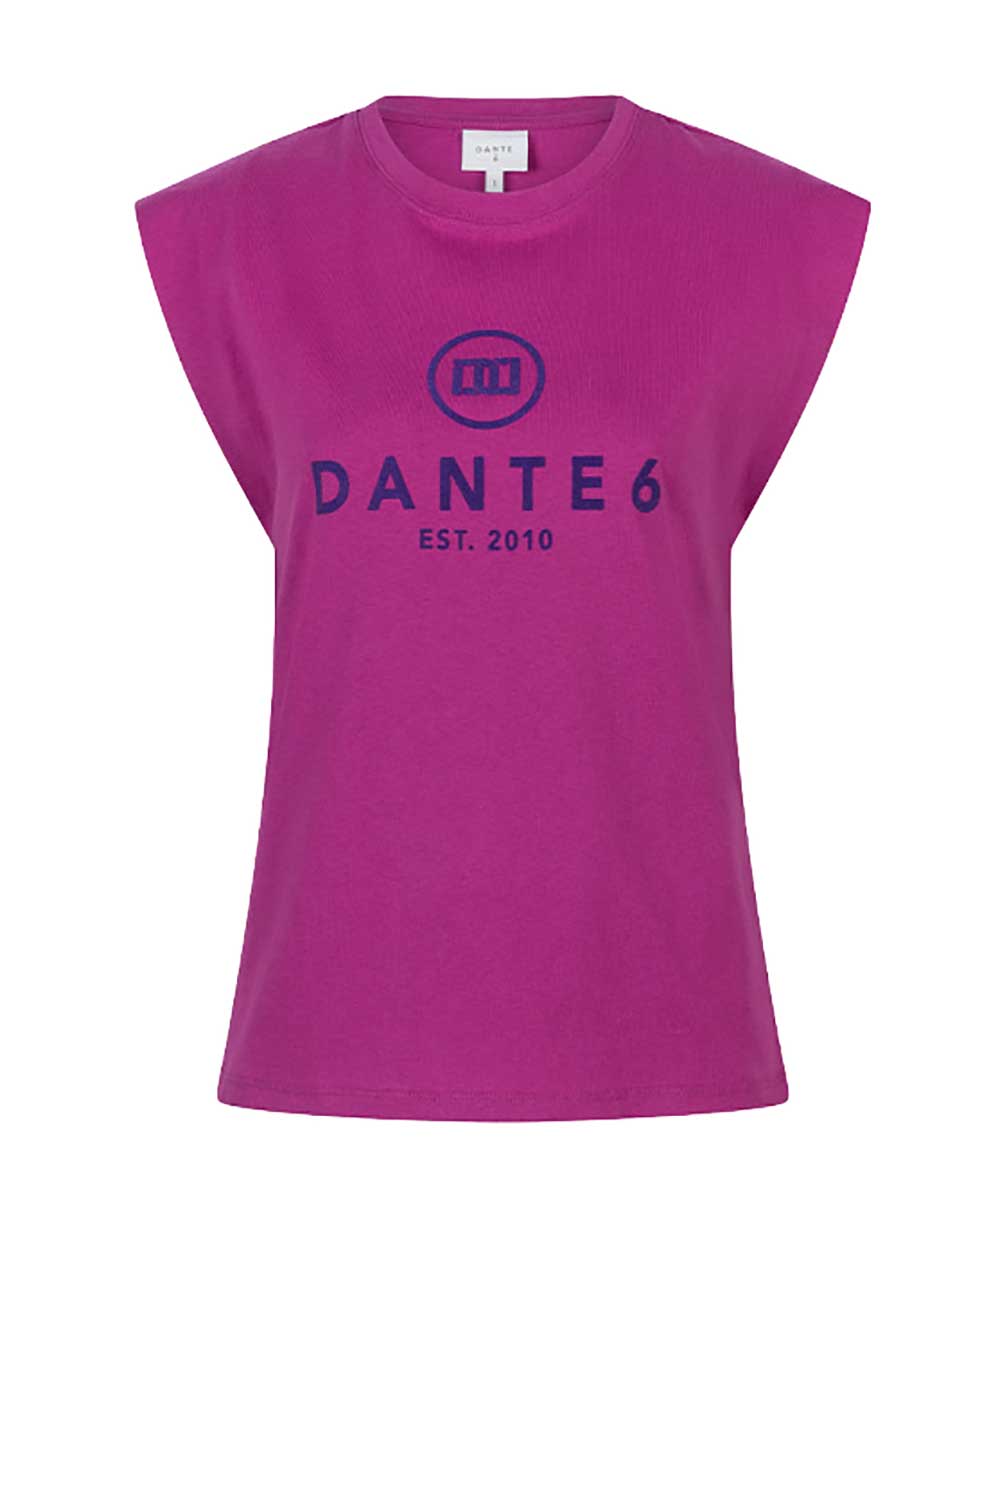 Dante 6 T-shirt met logo Bold roze